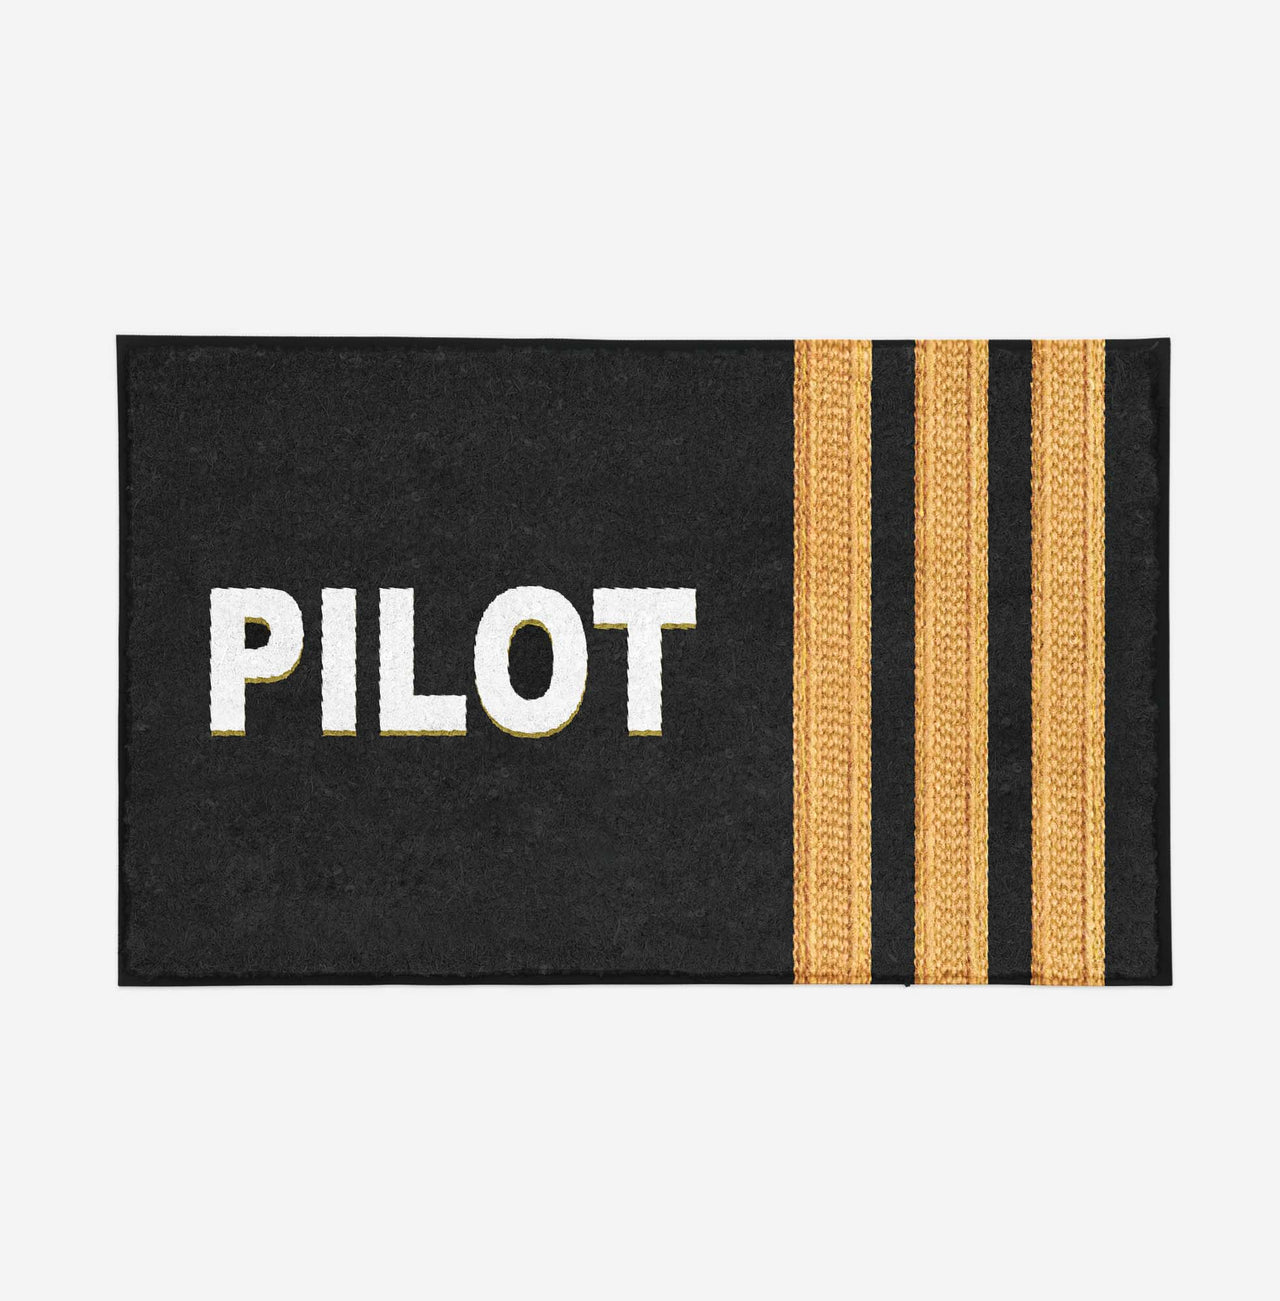 Pilot Text & Epaulettes (3 Lines) Designed Door Mats